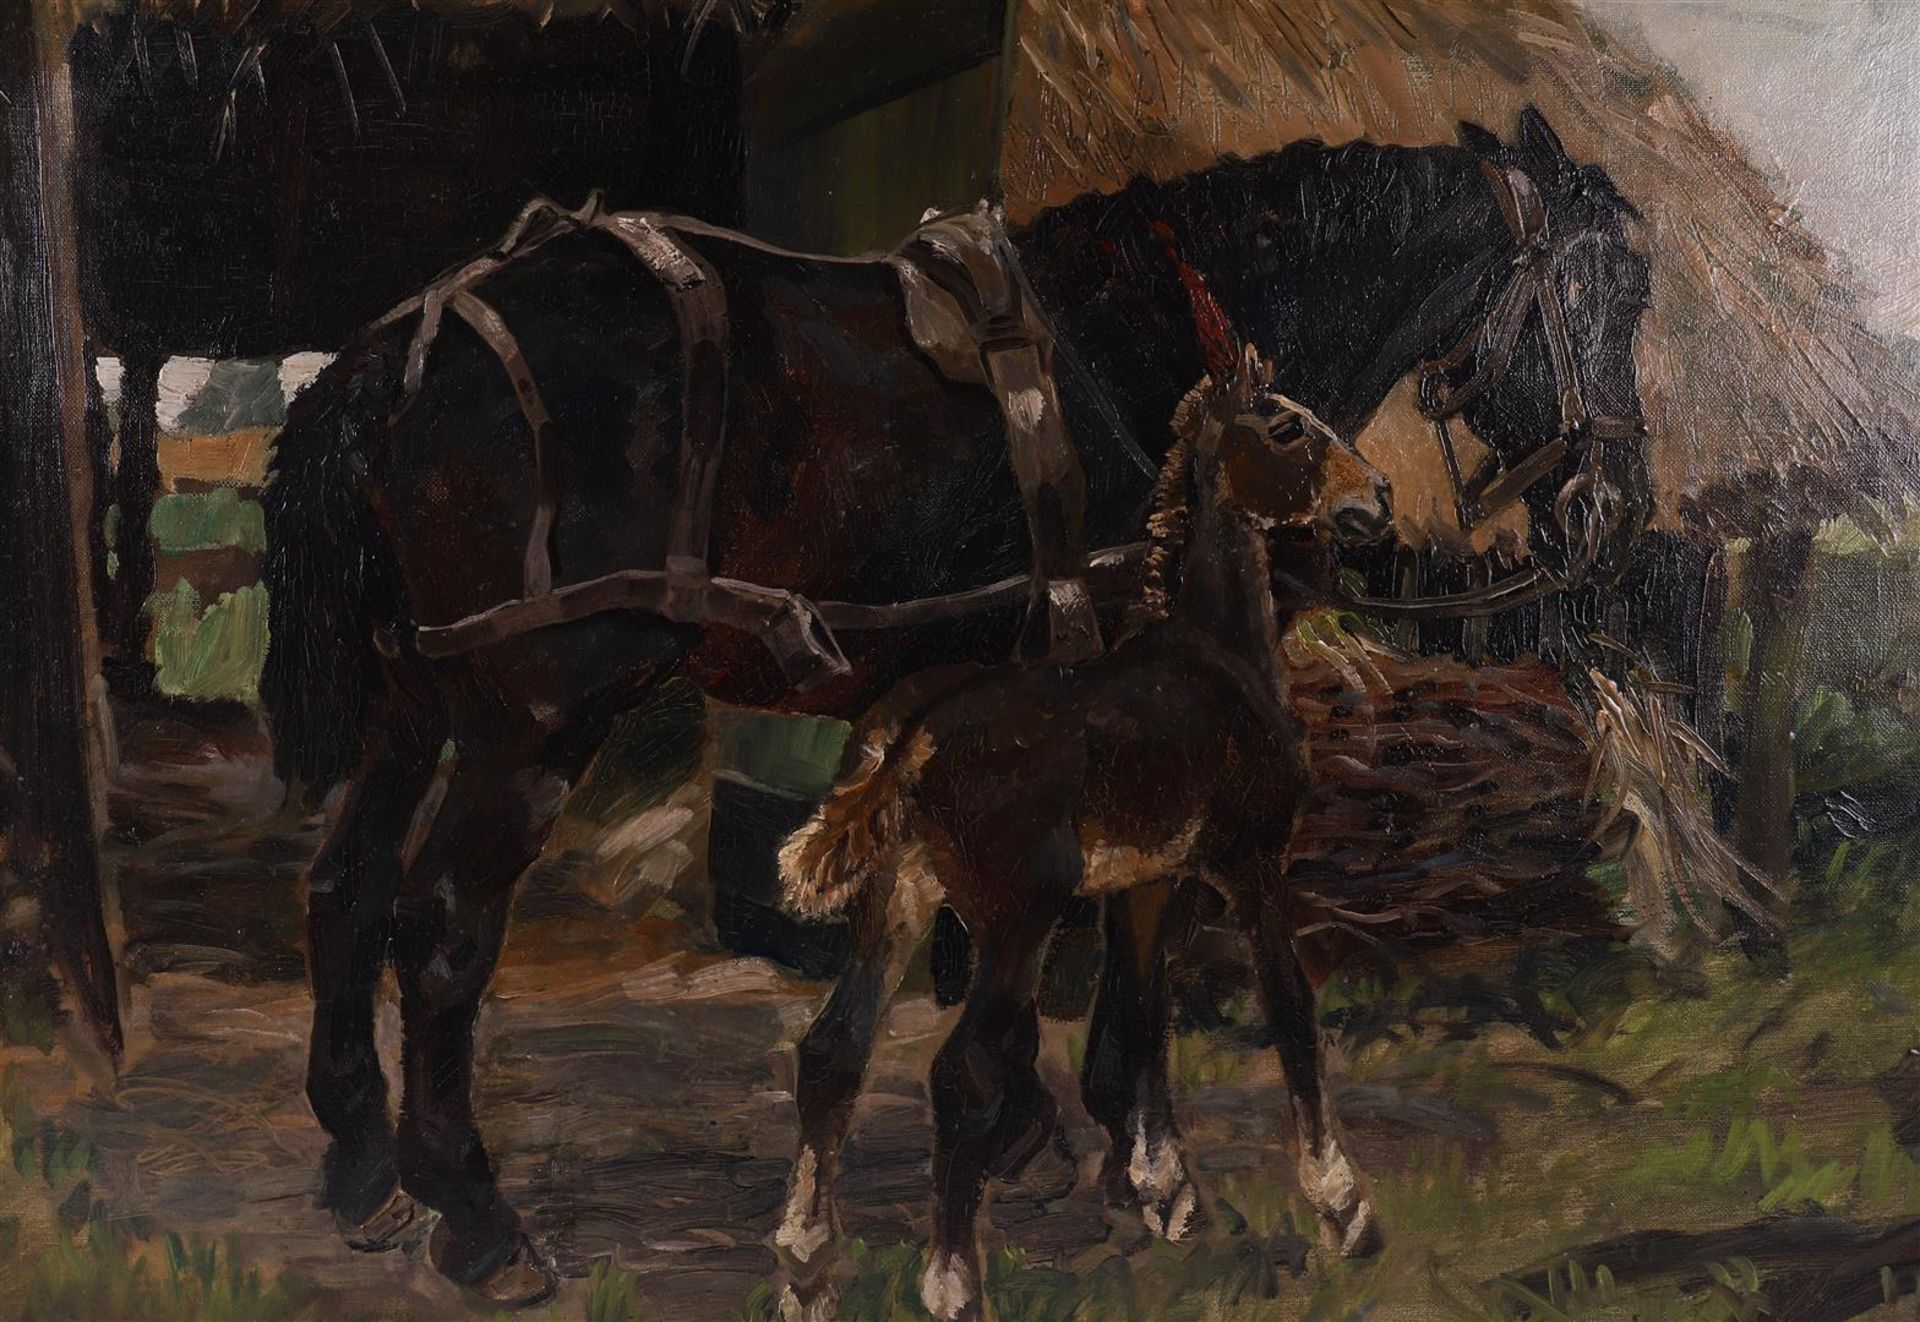 Walrecht, Bernardus HD (Ben) (Groningen1911 - Hilversum 1980) 'Horse with foal' - Image 3 of 7